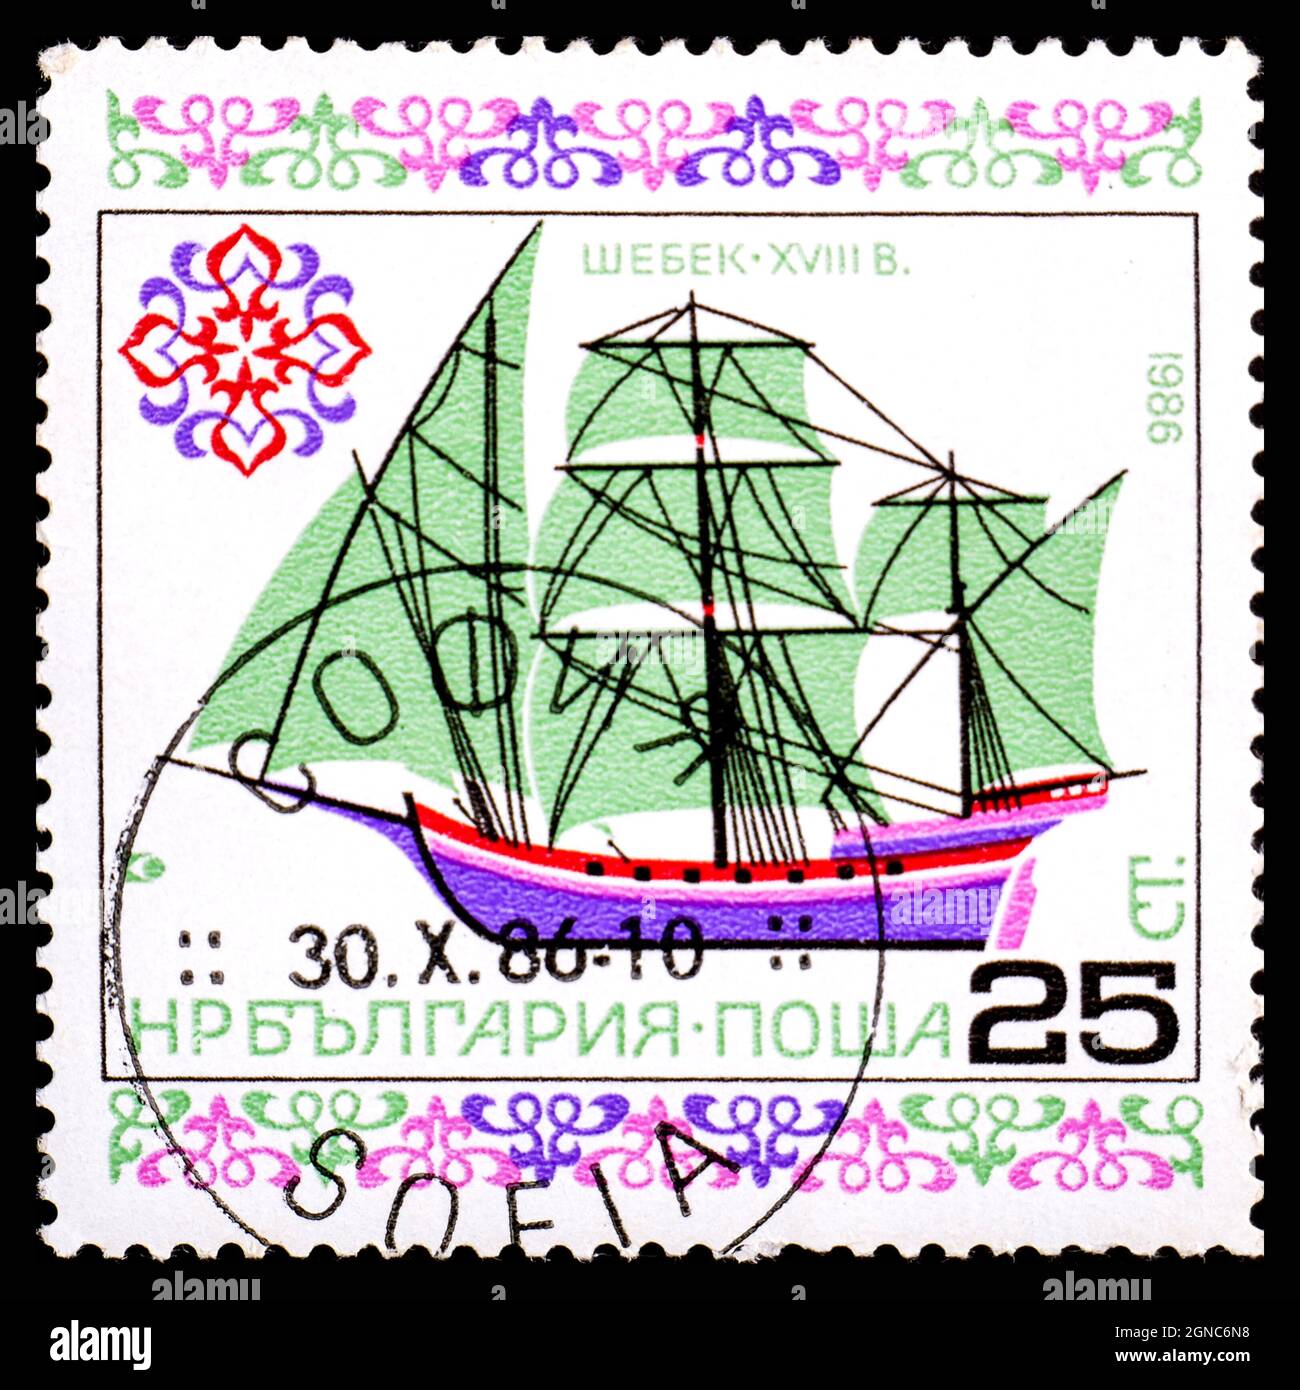 BULGARIA - CIRCA 1986: A stamp printed in Bulgaria shows image of a sailing ship Stock Photo